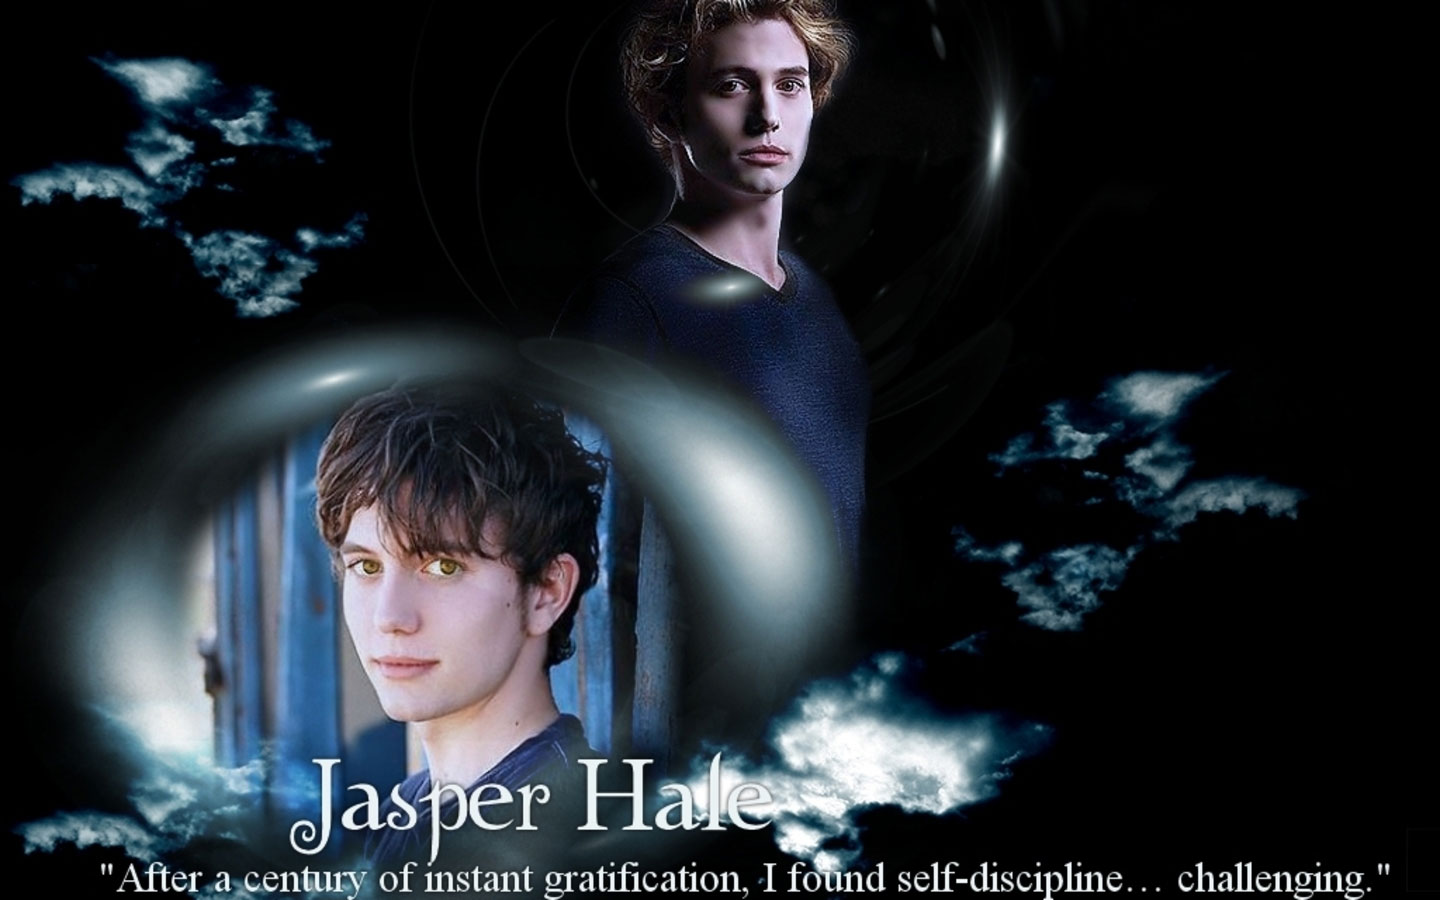 Jasper hale